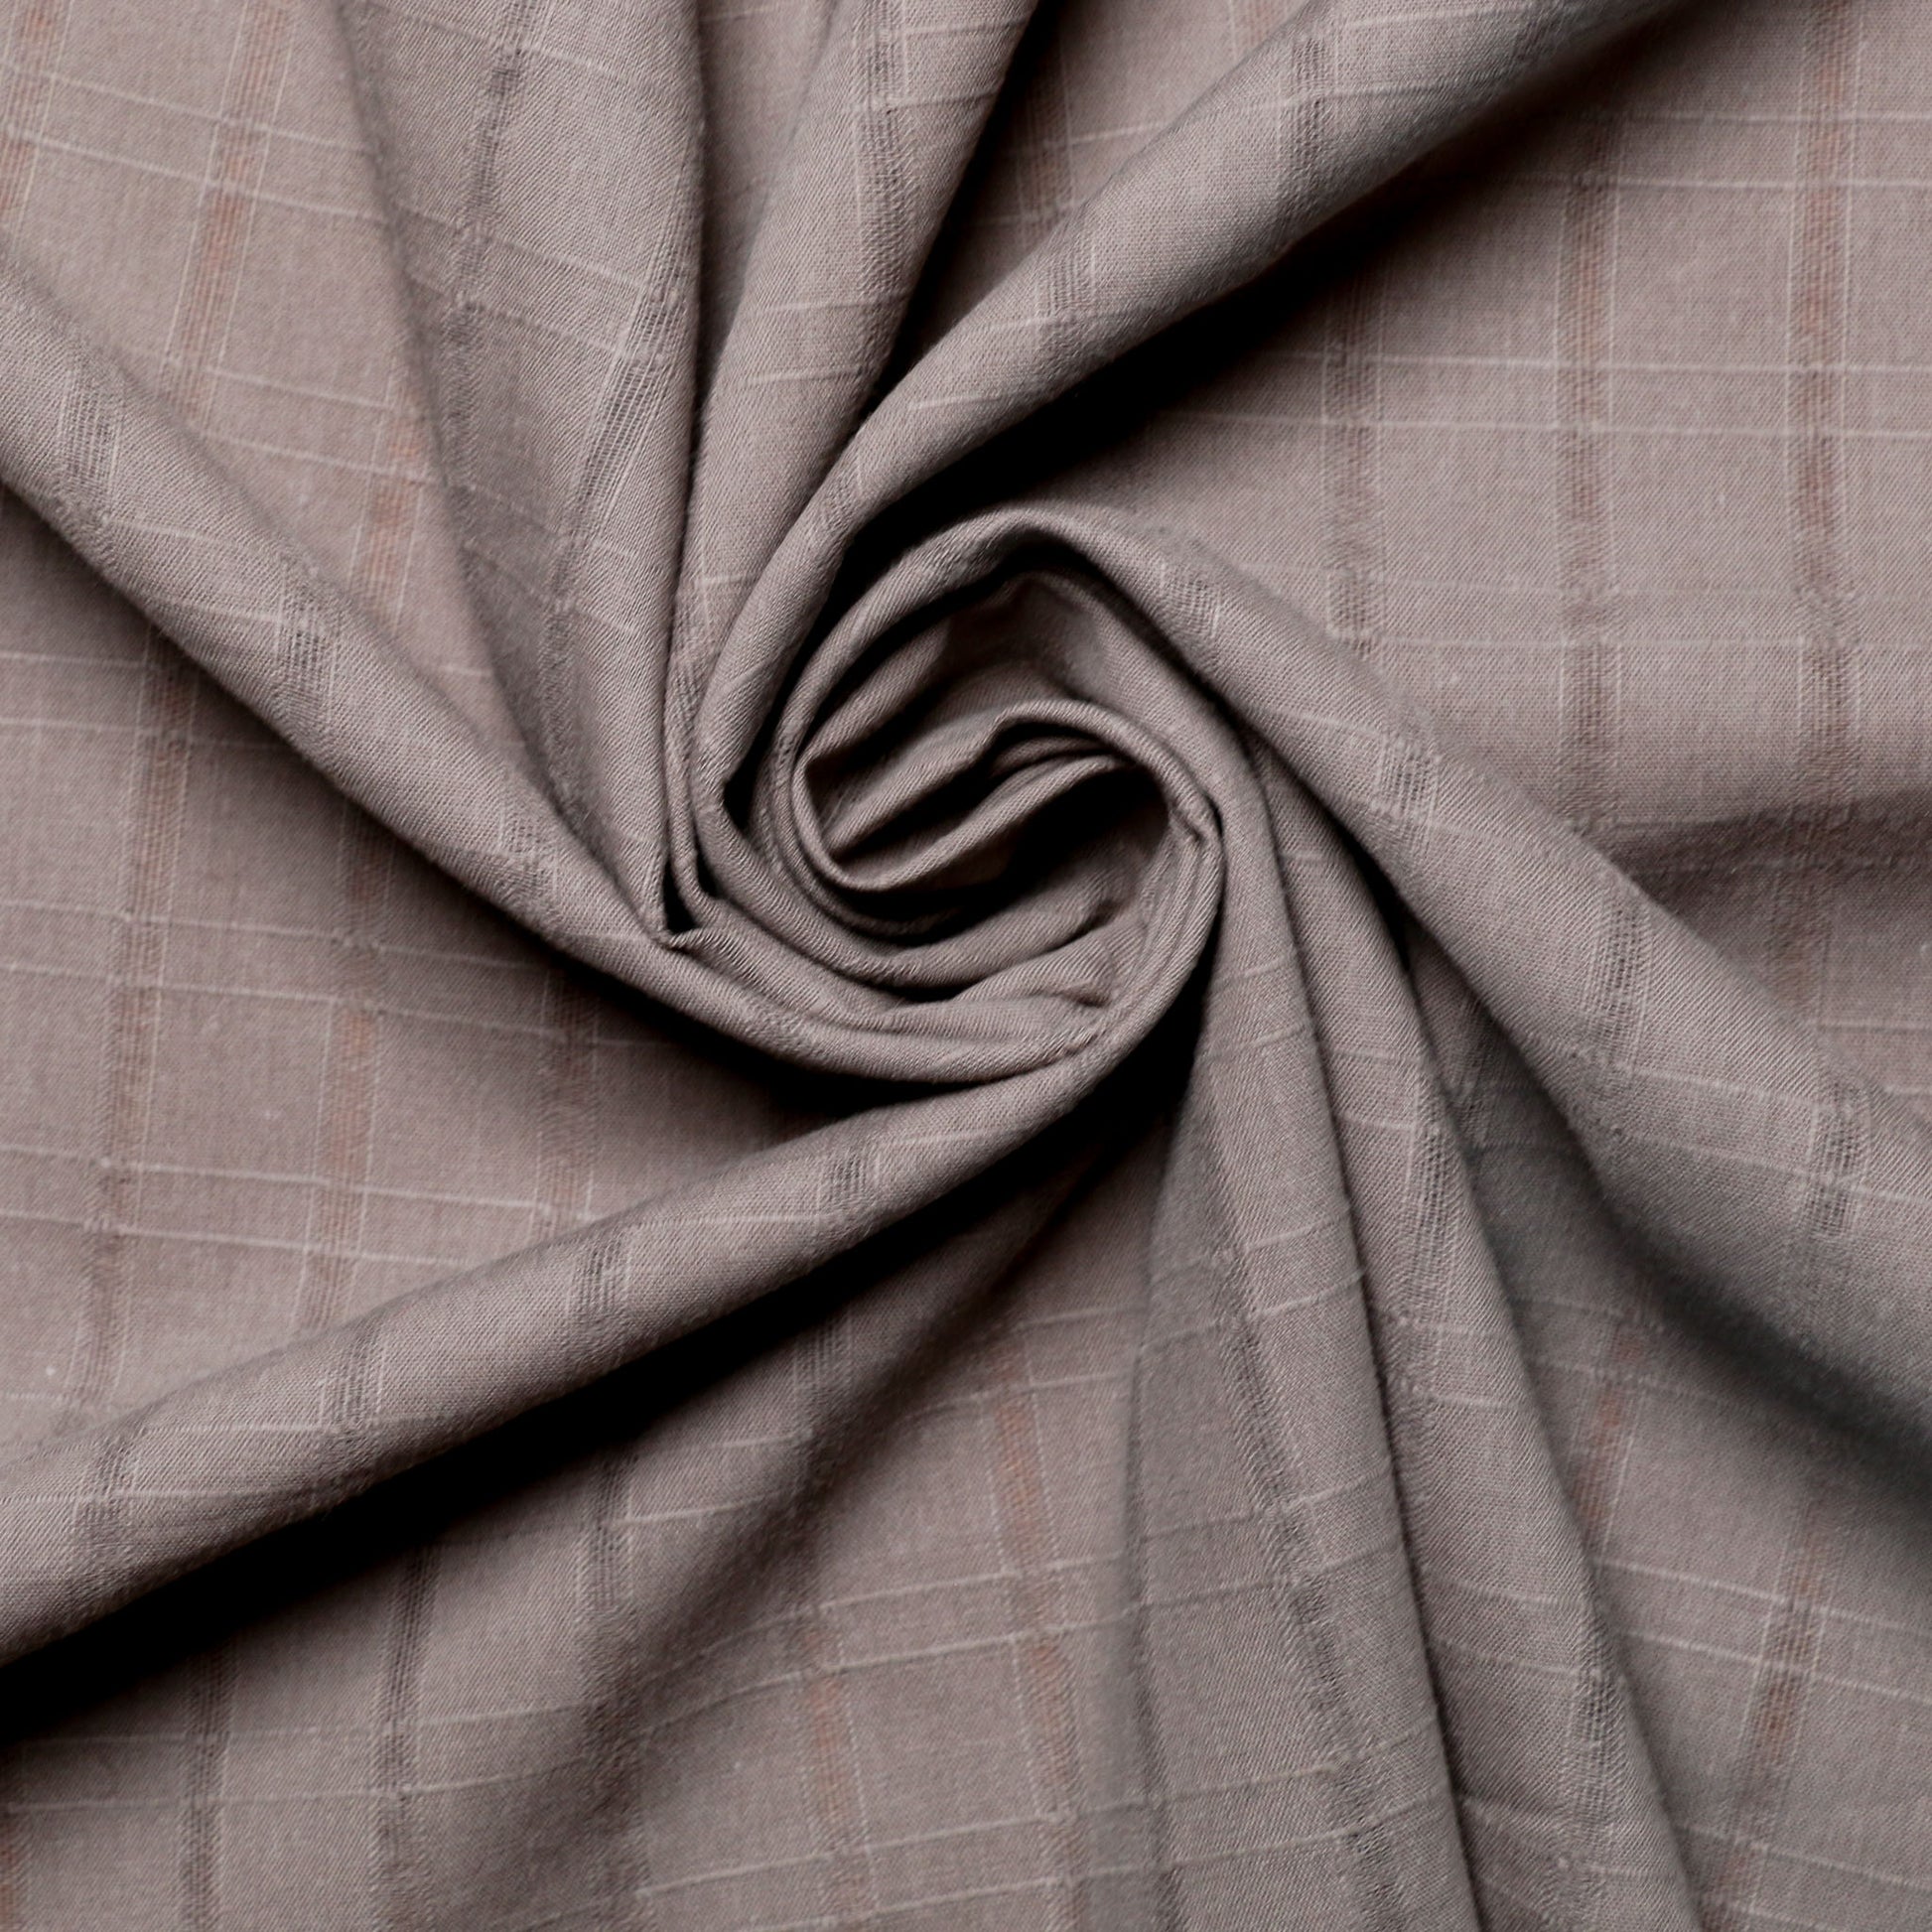 100% cotton voile in brown with jacquard stripe design